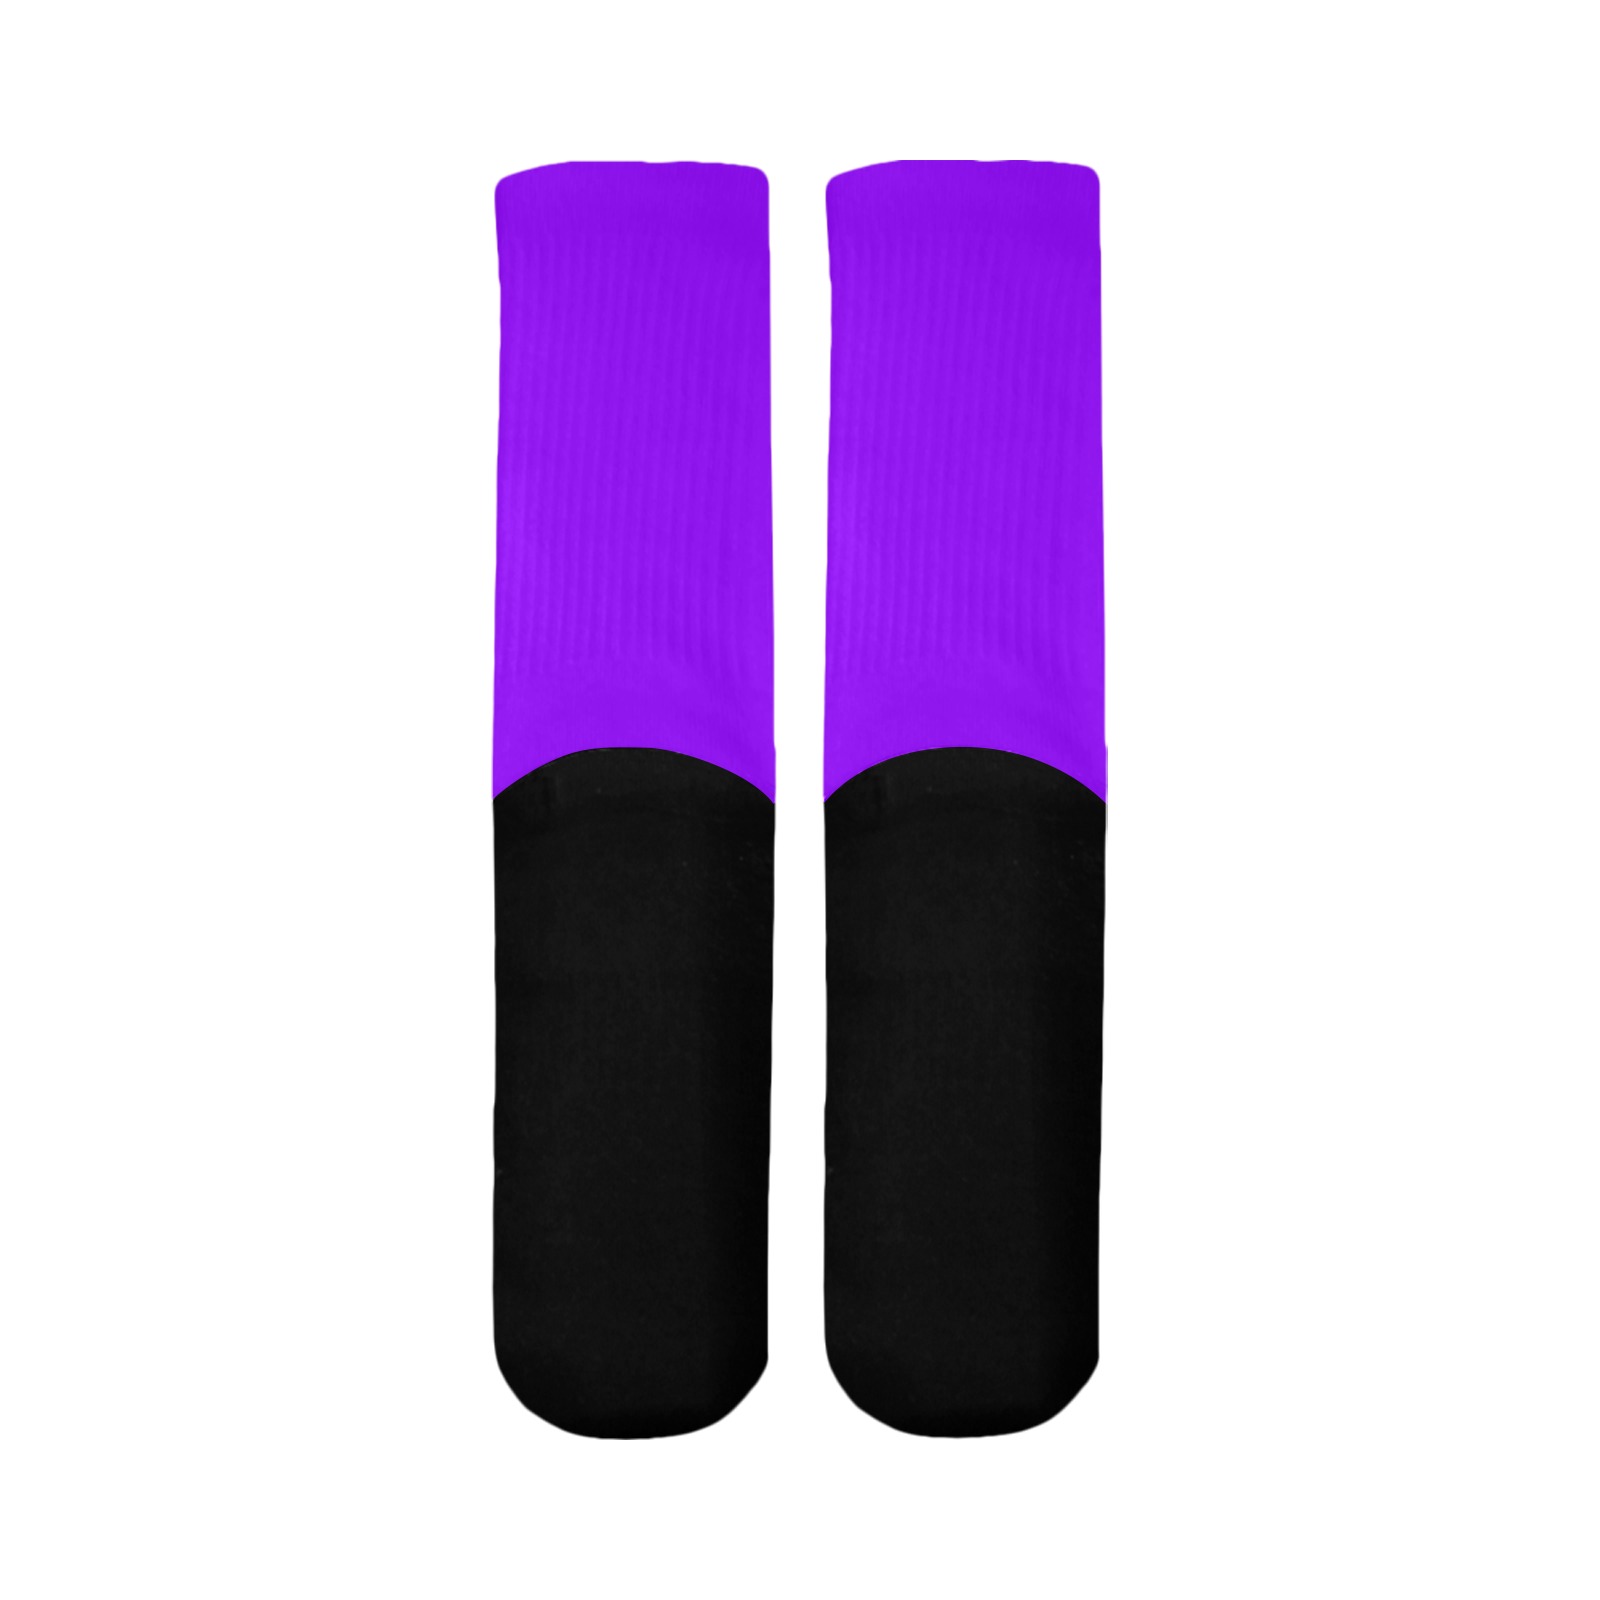 color electric violet Mid-Calf Socks (Black Sole)